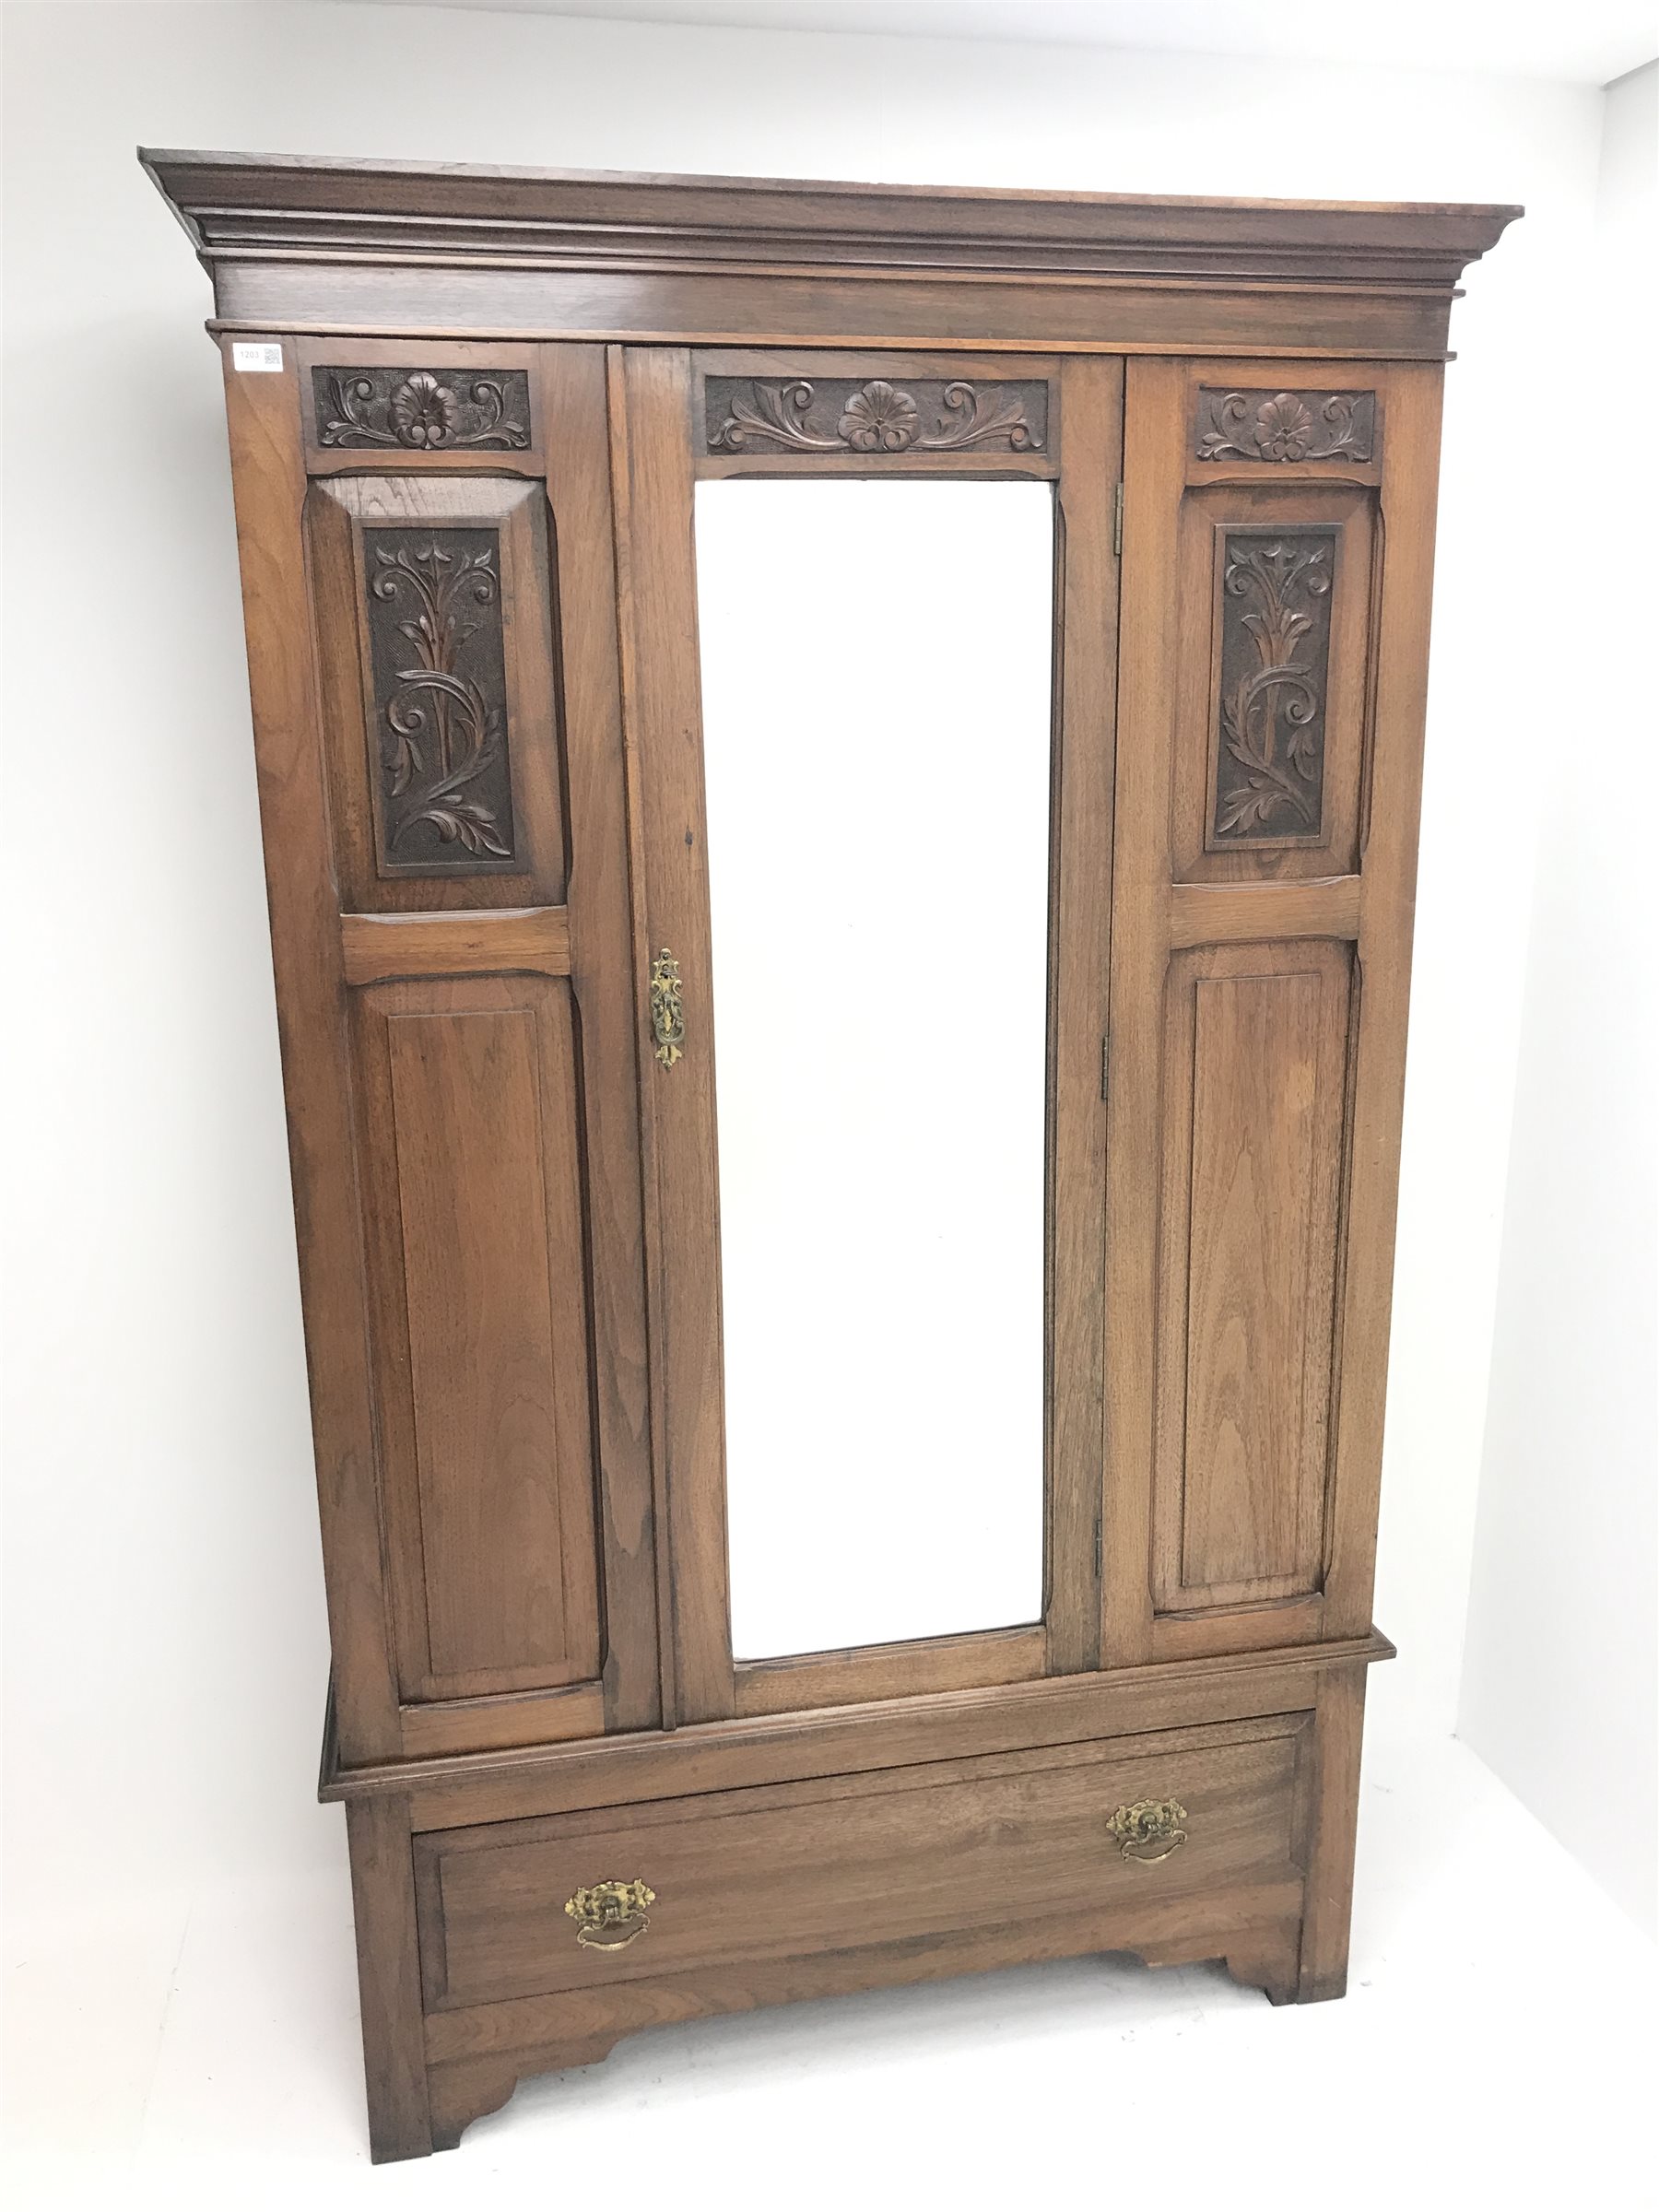 Edwardian walnut single mirror door wardrobe with base drawer, W114cm, D45cm